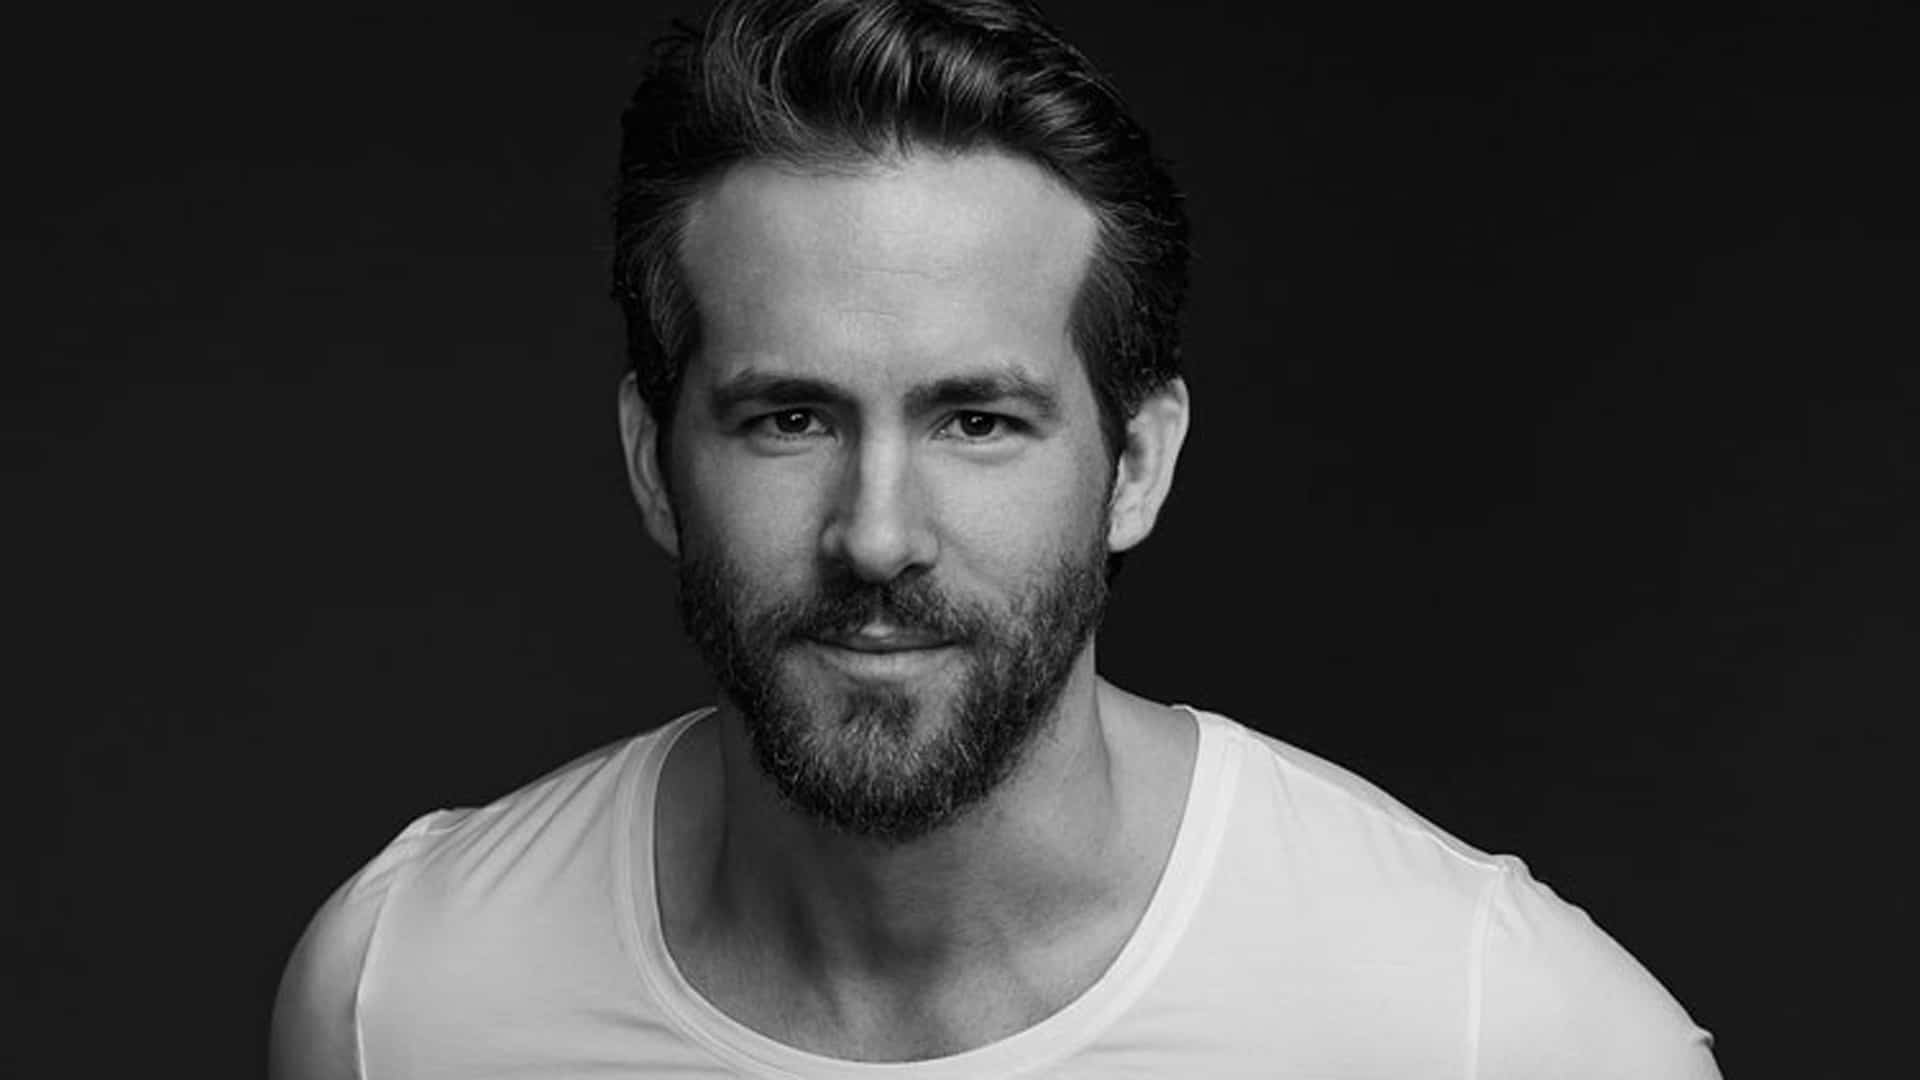 Ryan Reynolds Portrait Photoshoot Wallpapers